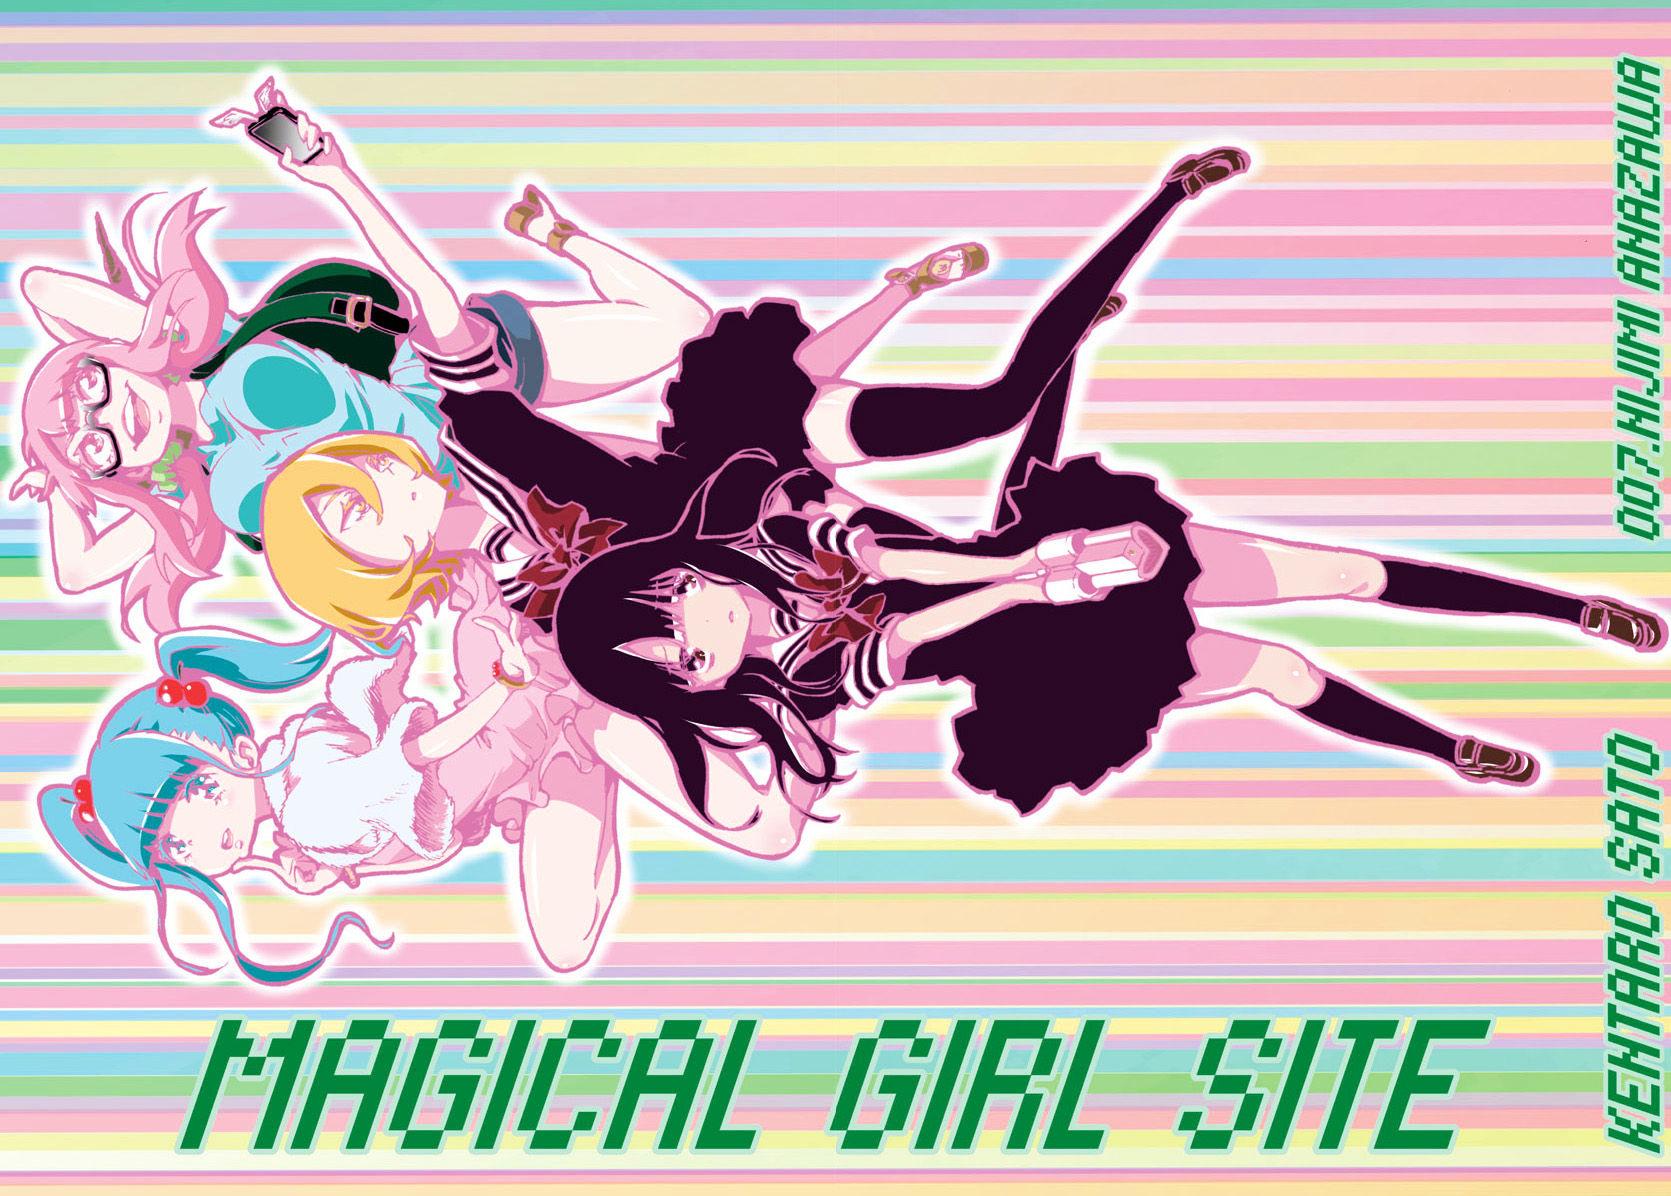 Mahou Shoujo Site wallpaper by mrdmtx - Download on ZEDGE™